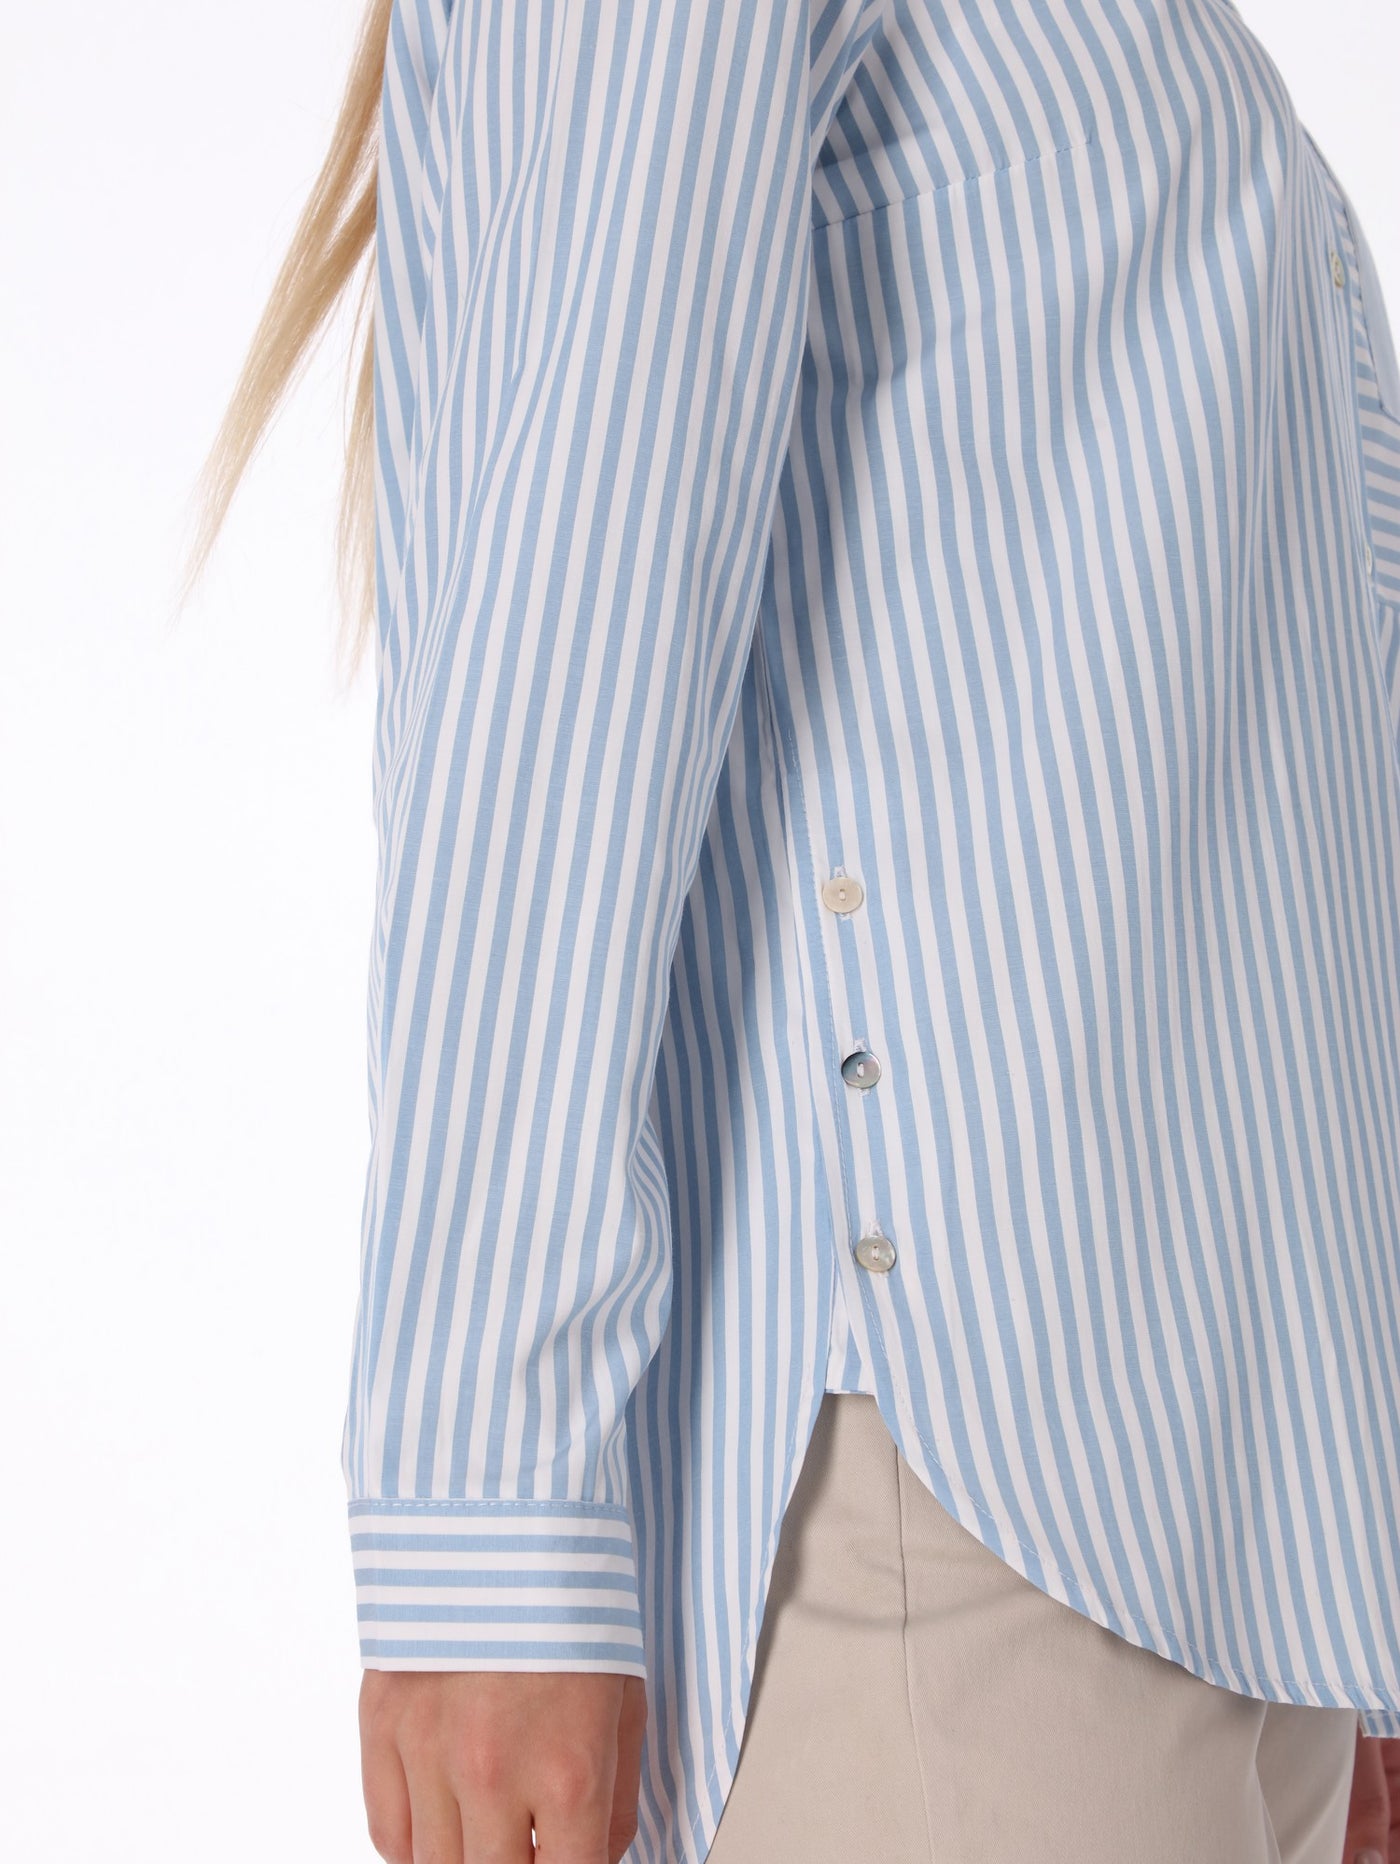 Shirt - Contrast Striped Pocket